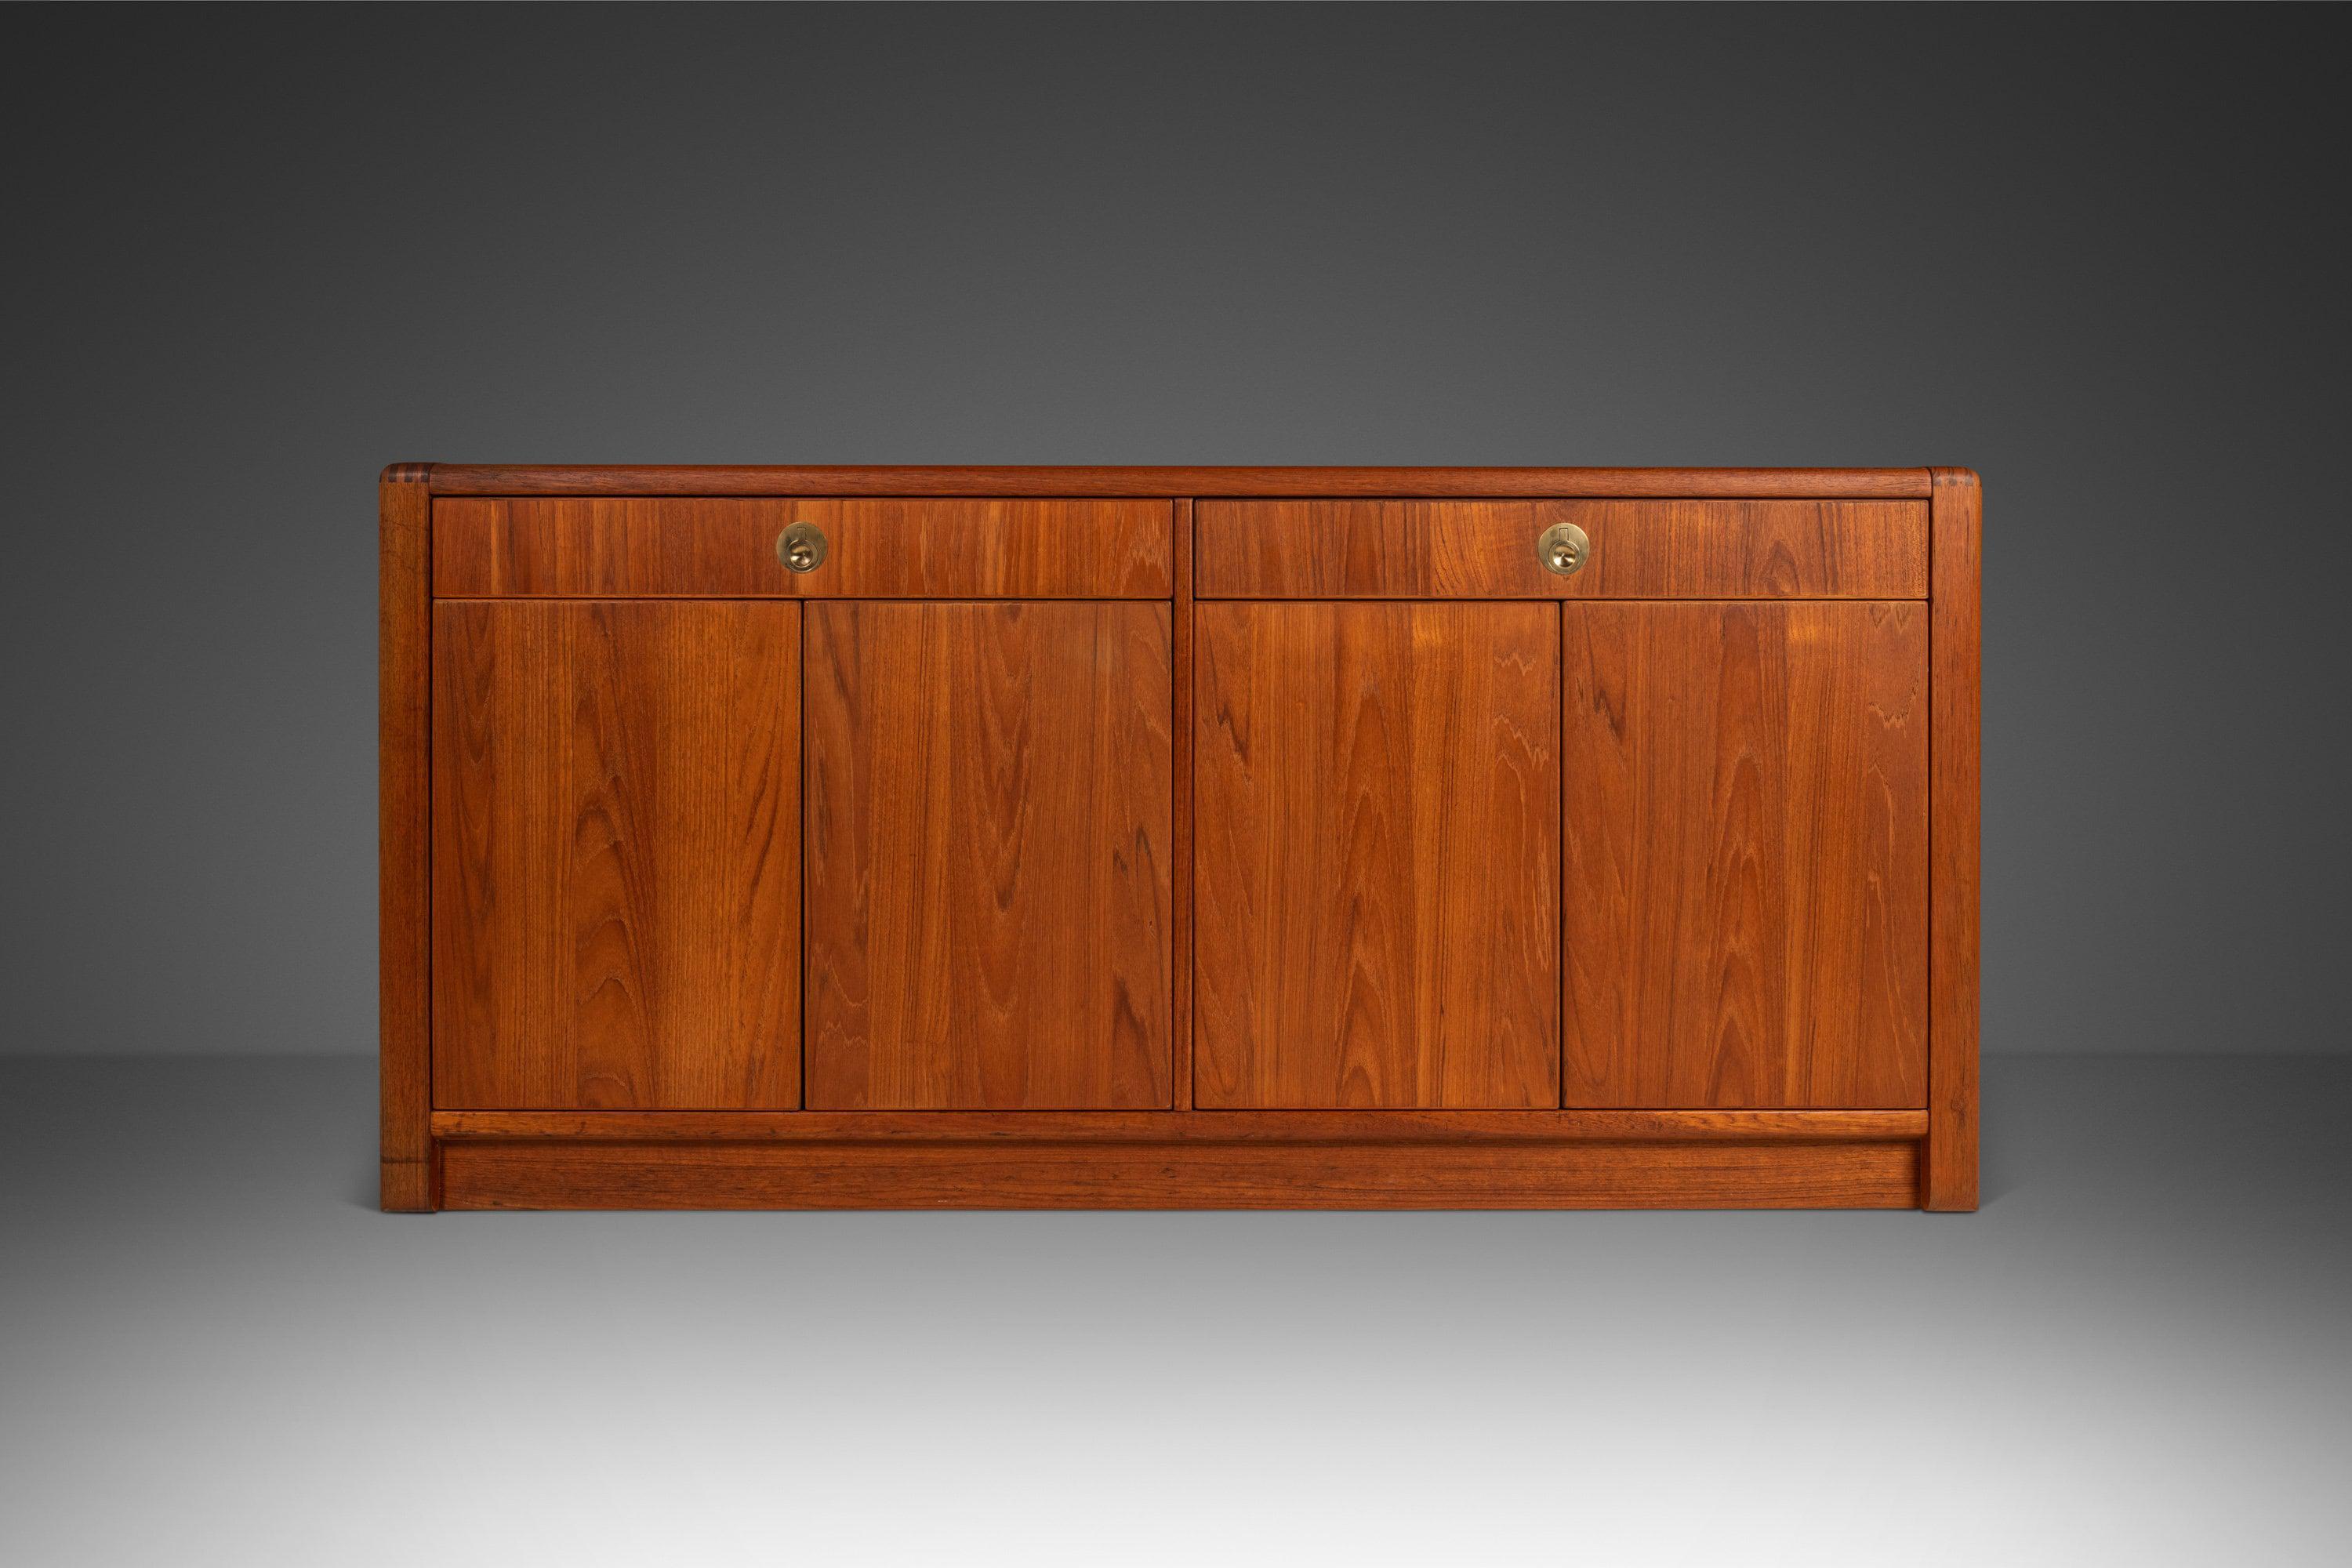 Unknown Elegant Mid-Century Modern Cabinet Sideboard Credenza in Teak by D-Scan, c. 1970 For Sale